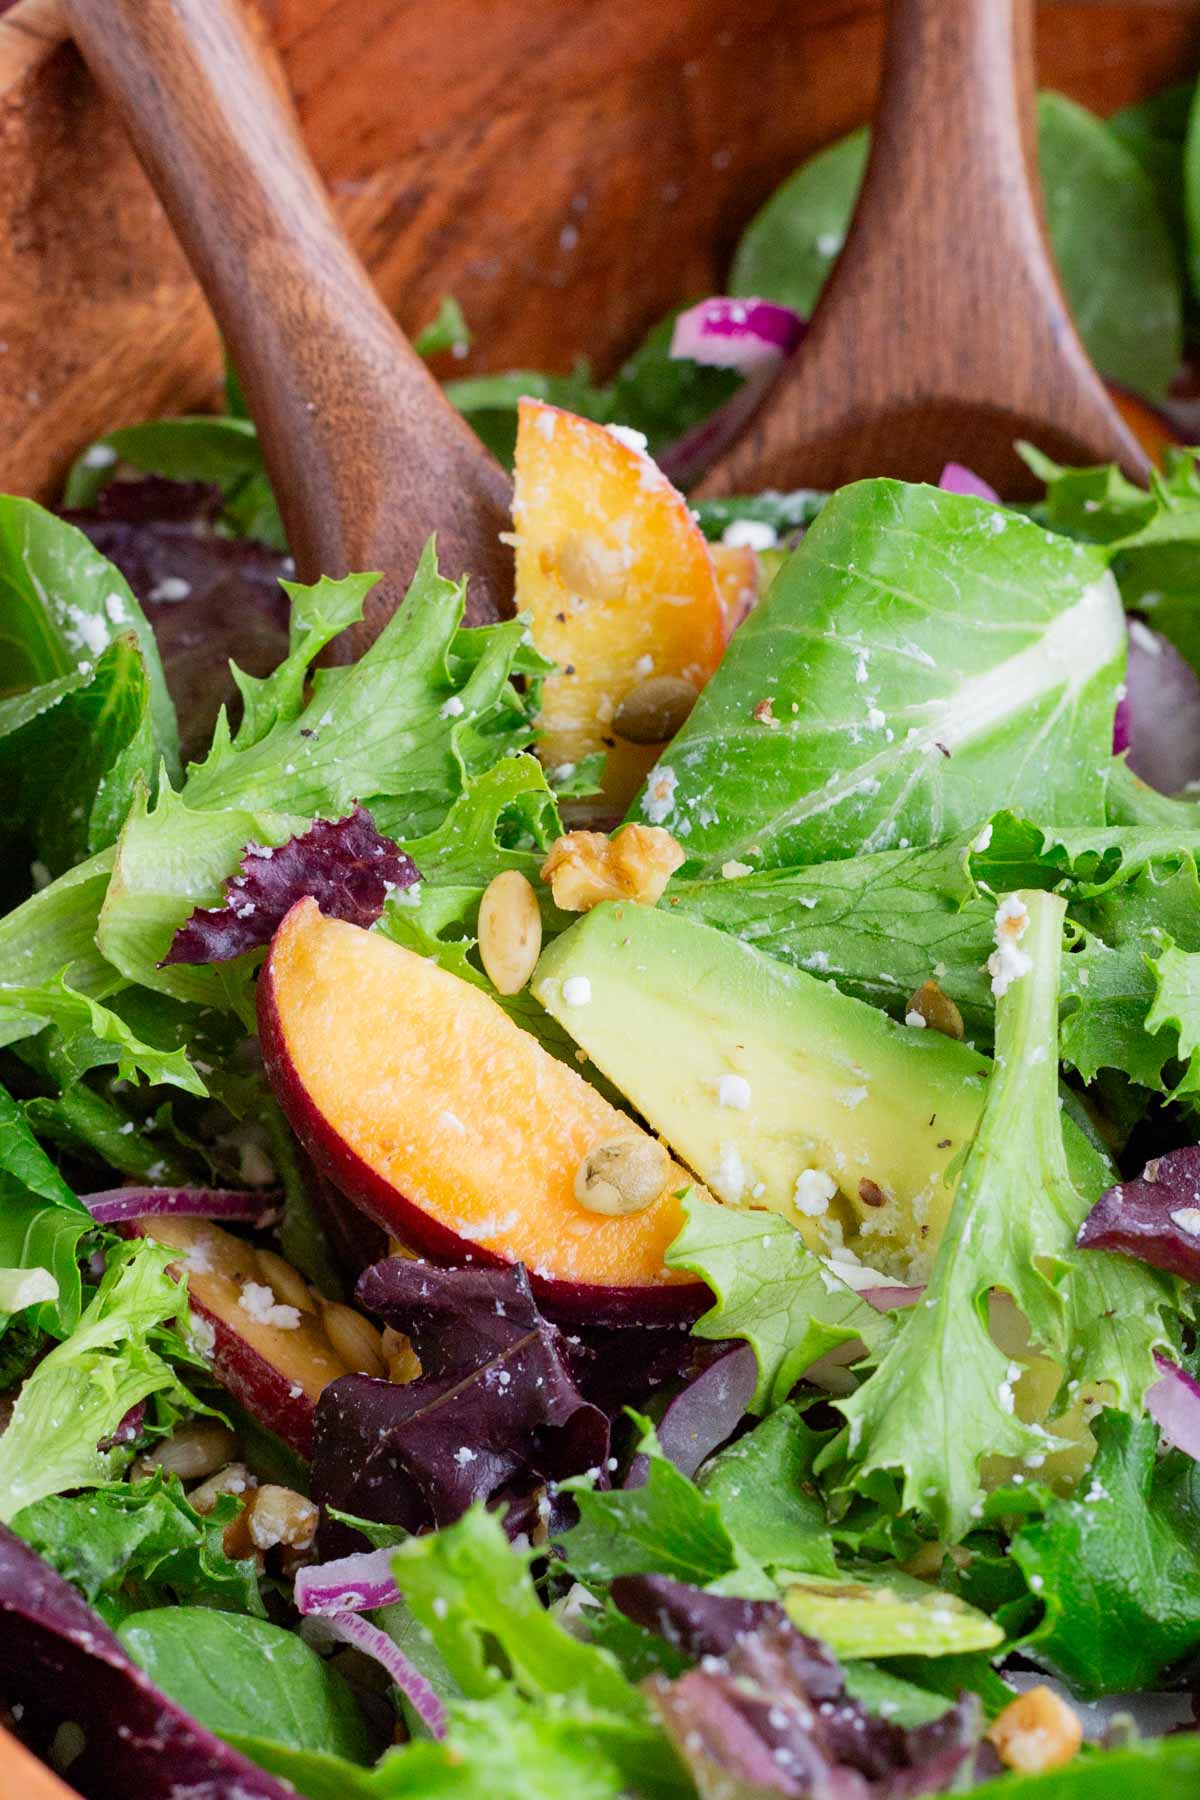 Wooden spoons stir a healthy peach salad.